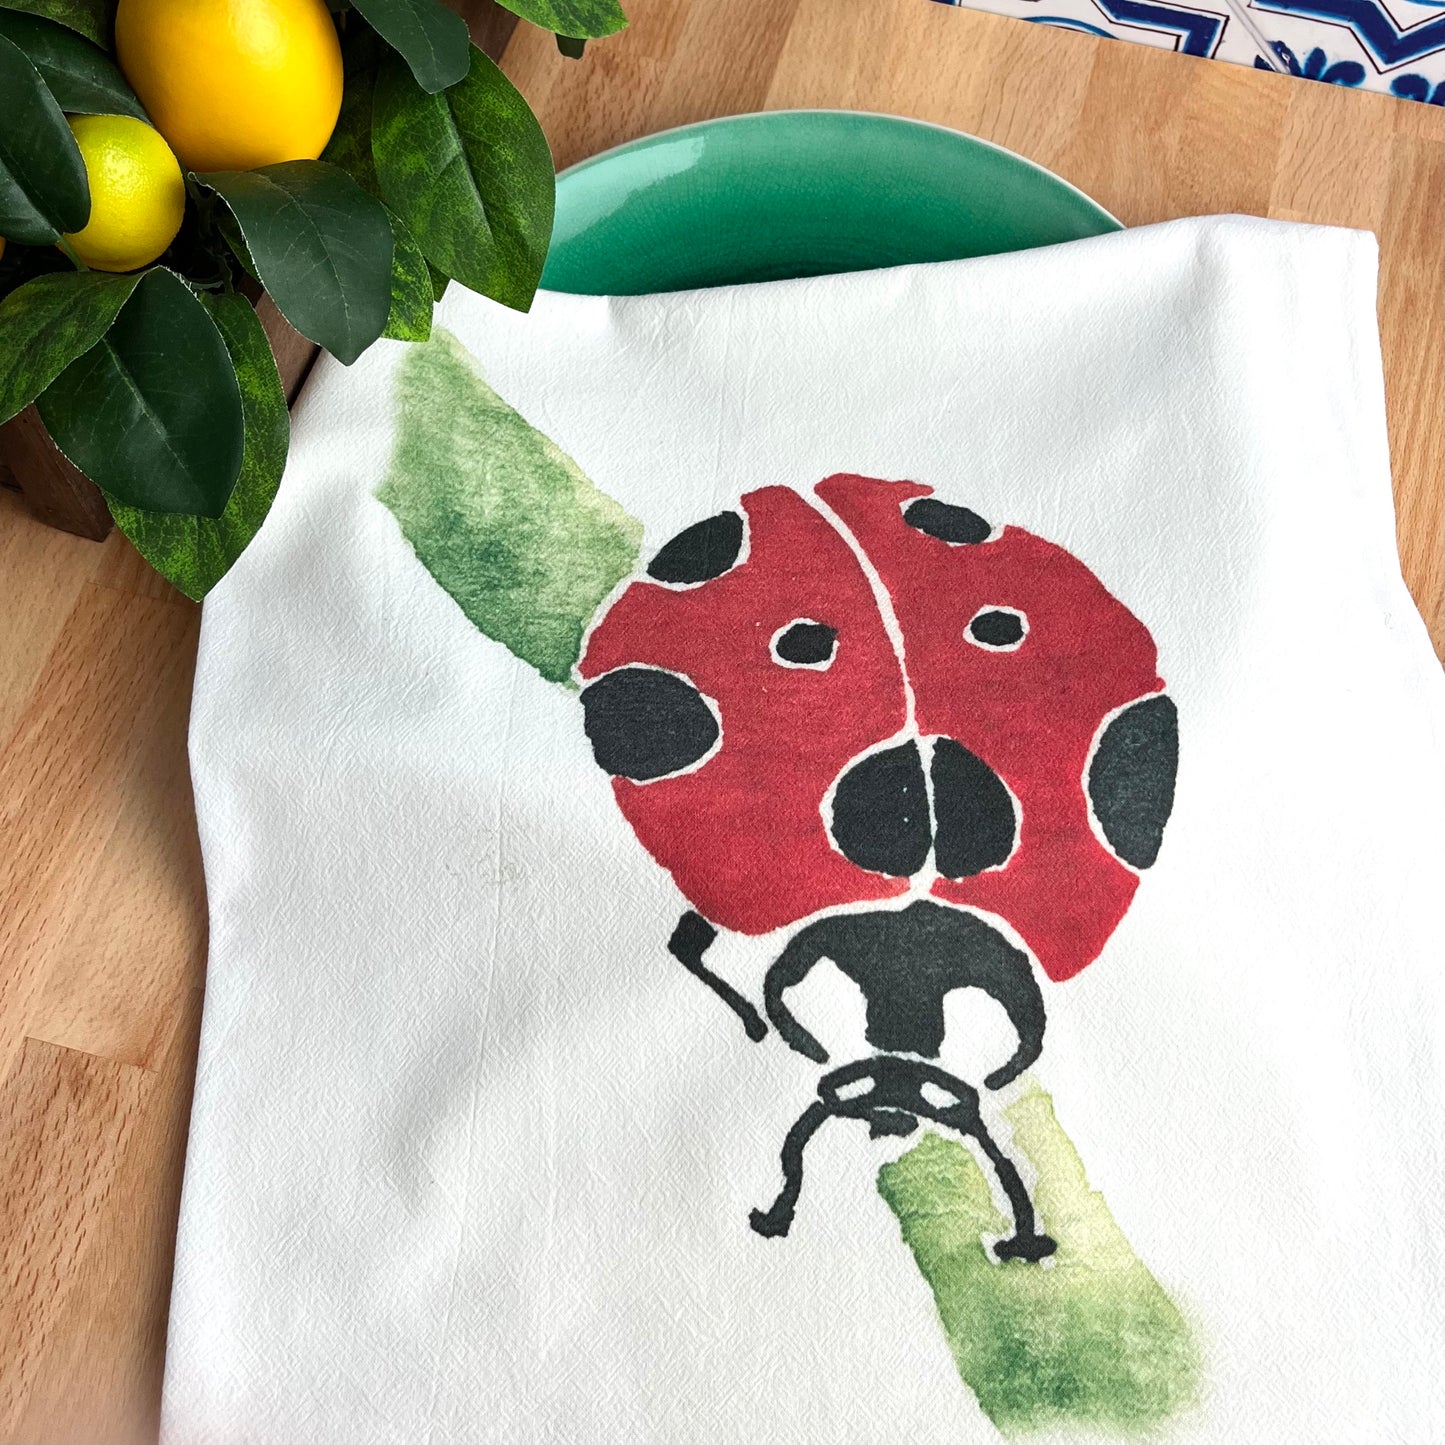 Ladybug Flour Sack Tea Towel, Garden